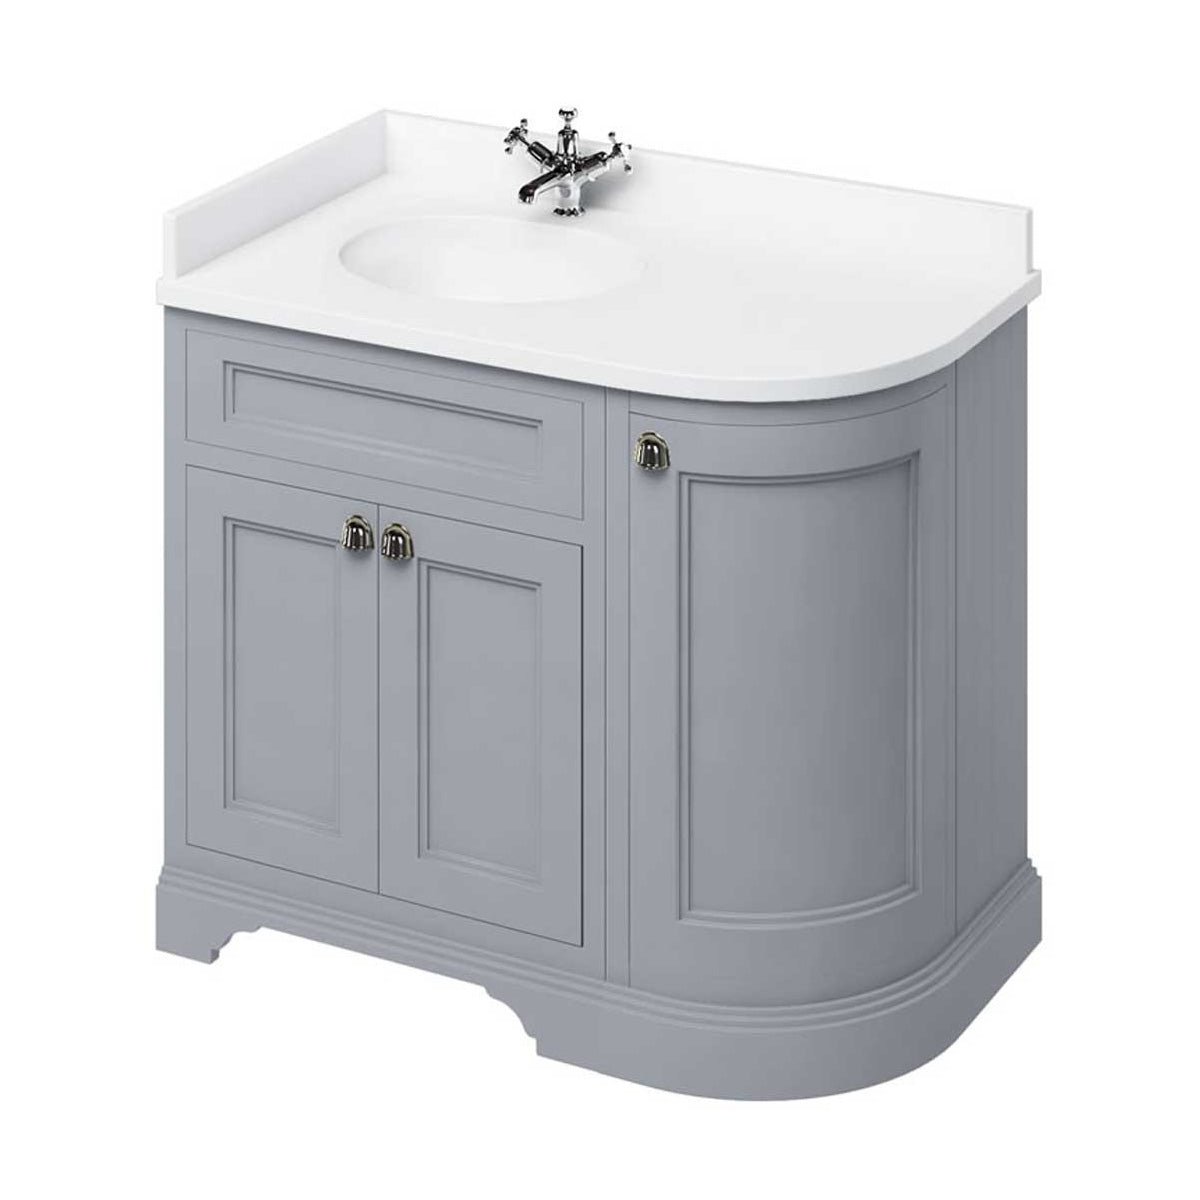 burlington 1000 LH curved freestanding 2 door vanity unit with basin and white worktop classic grey